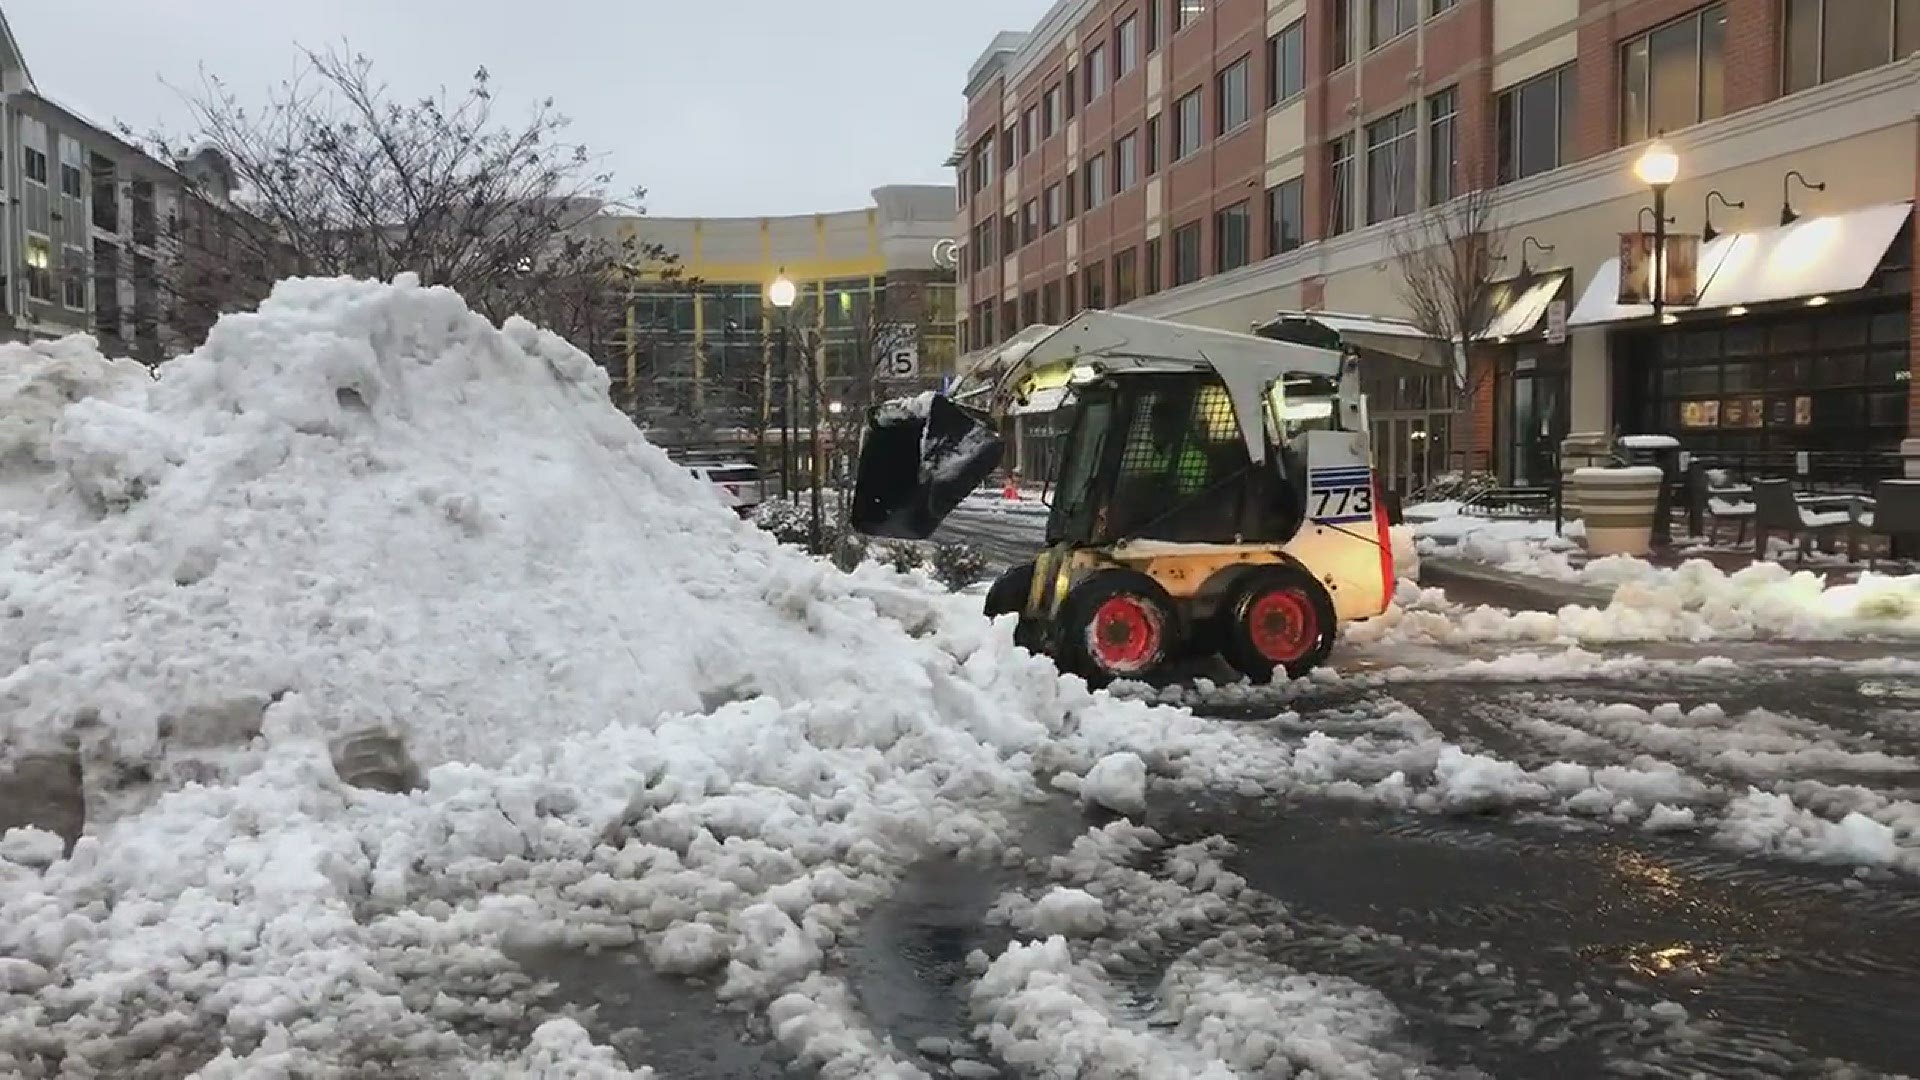 Snow being cleared in Leesburg, Virginia
Credit: Matthew Torres